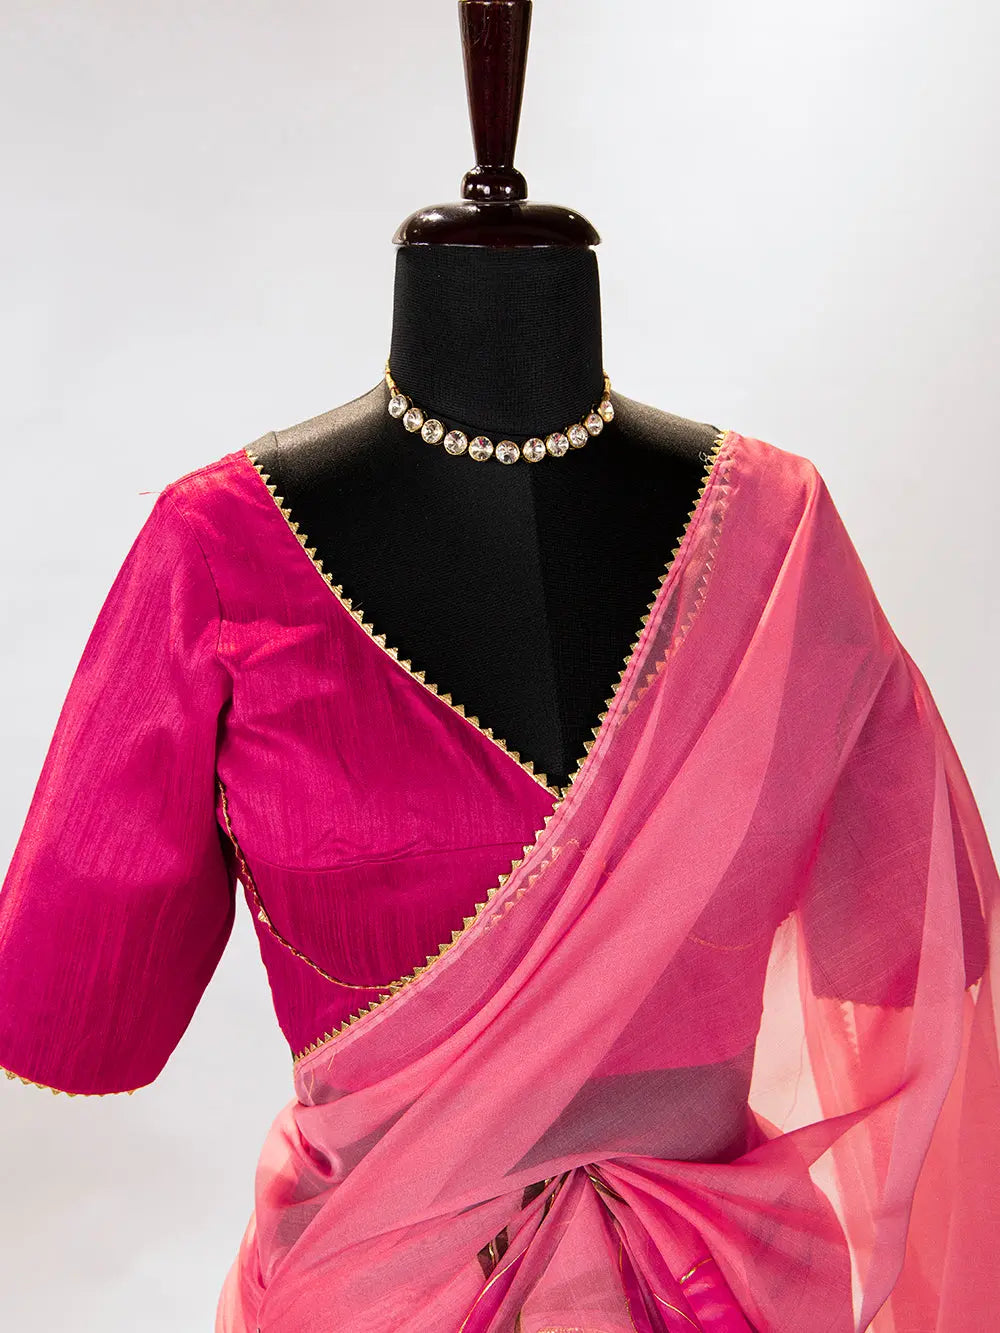 Blush Color Saree in Floral & Foil Print - Colorful Saree